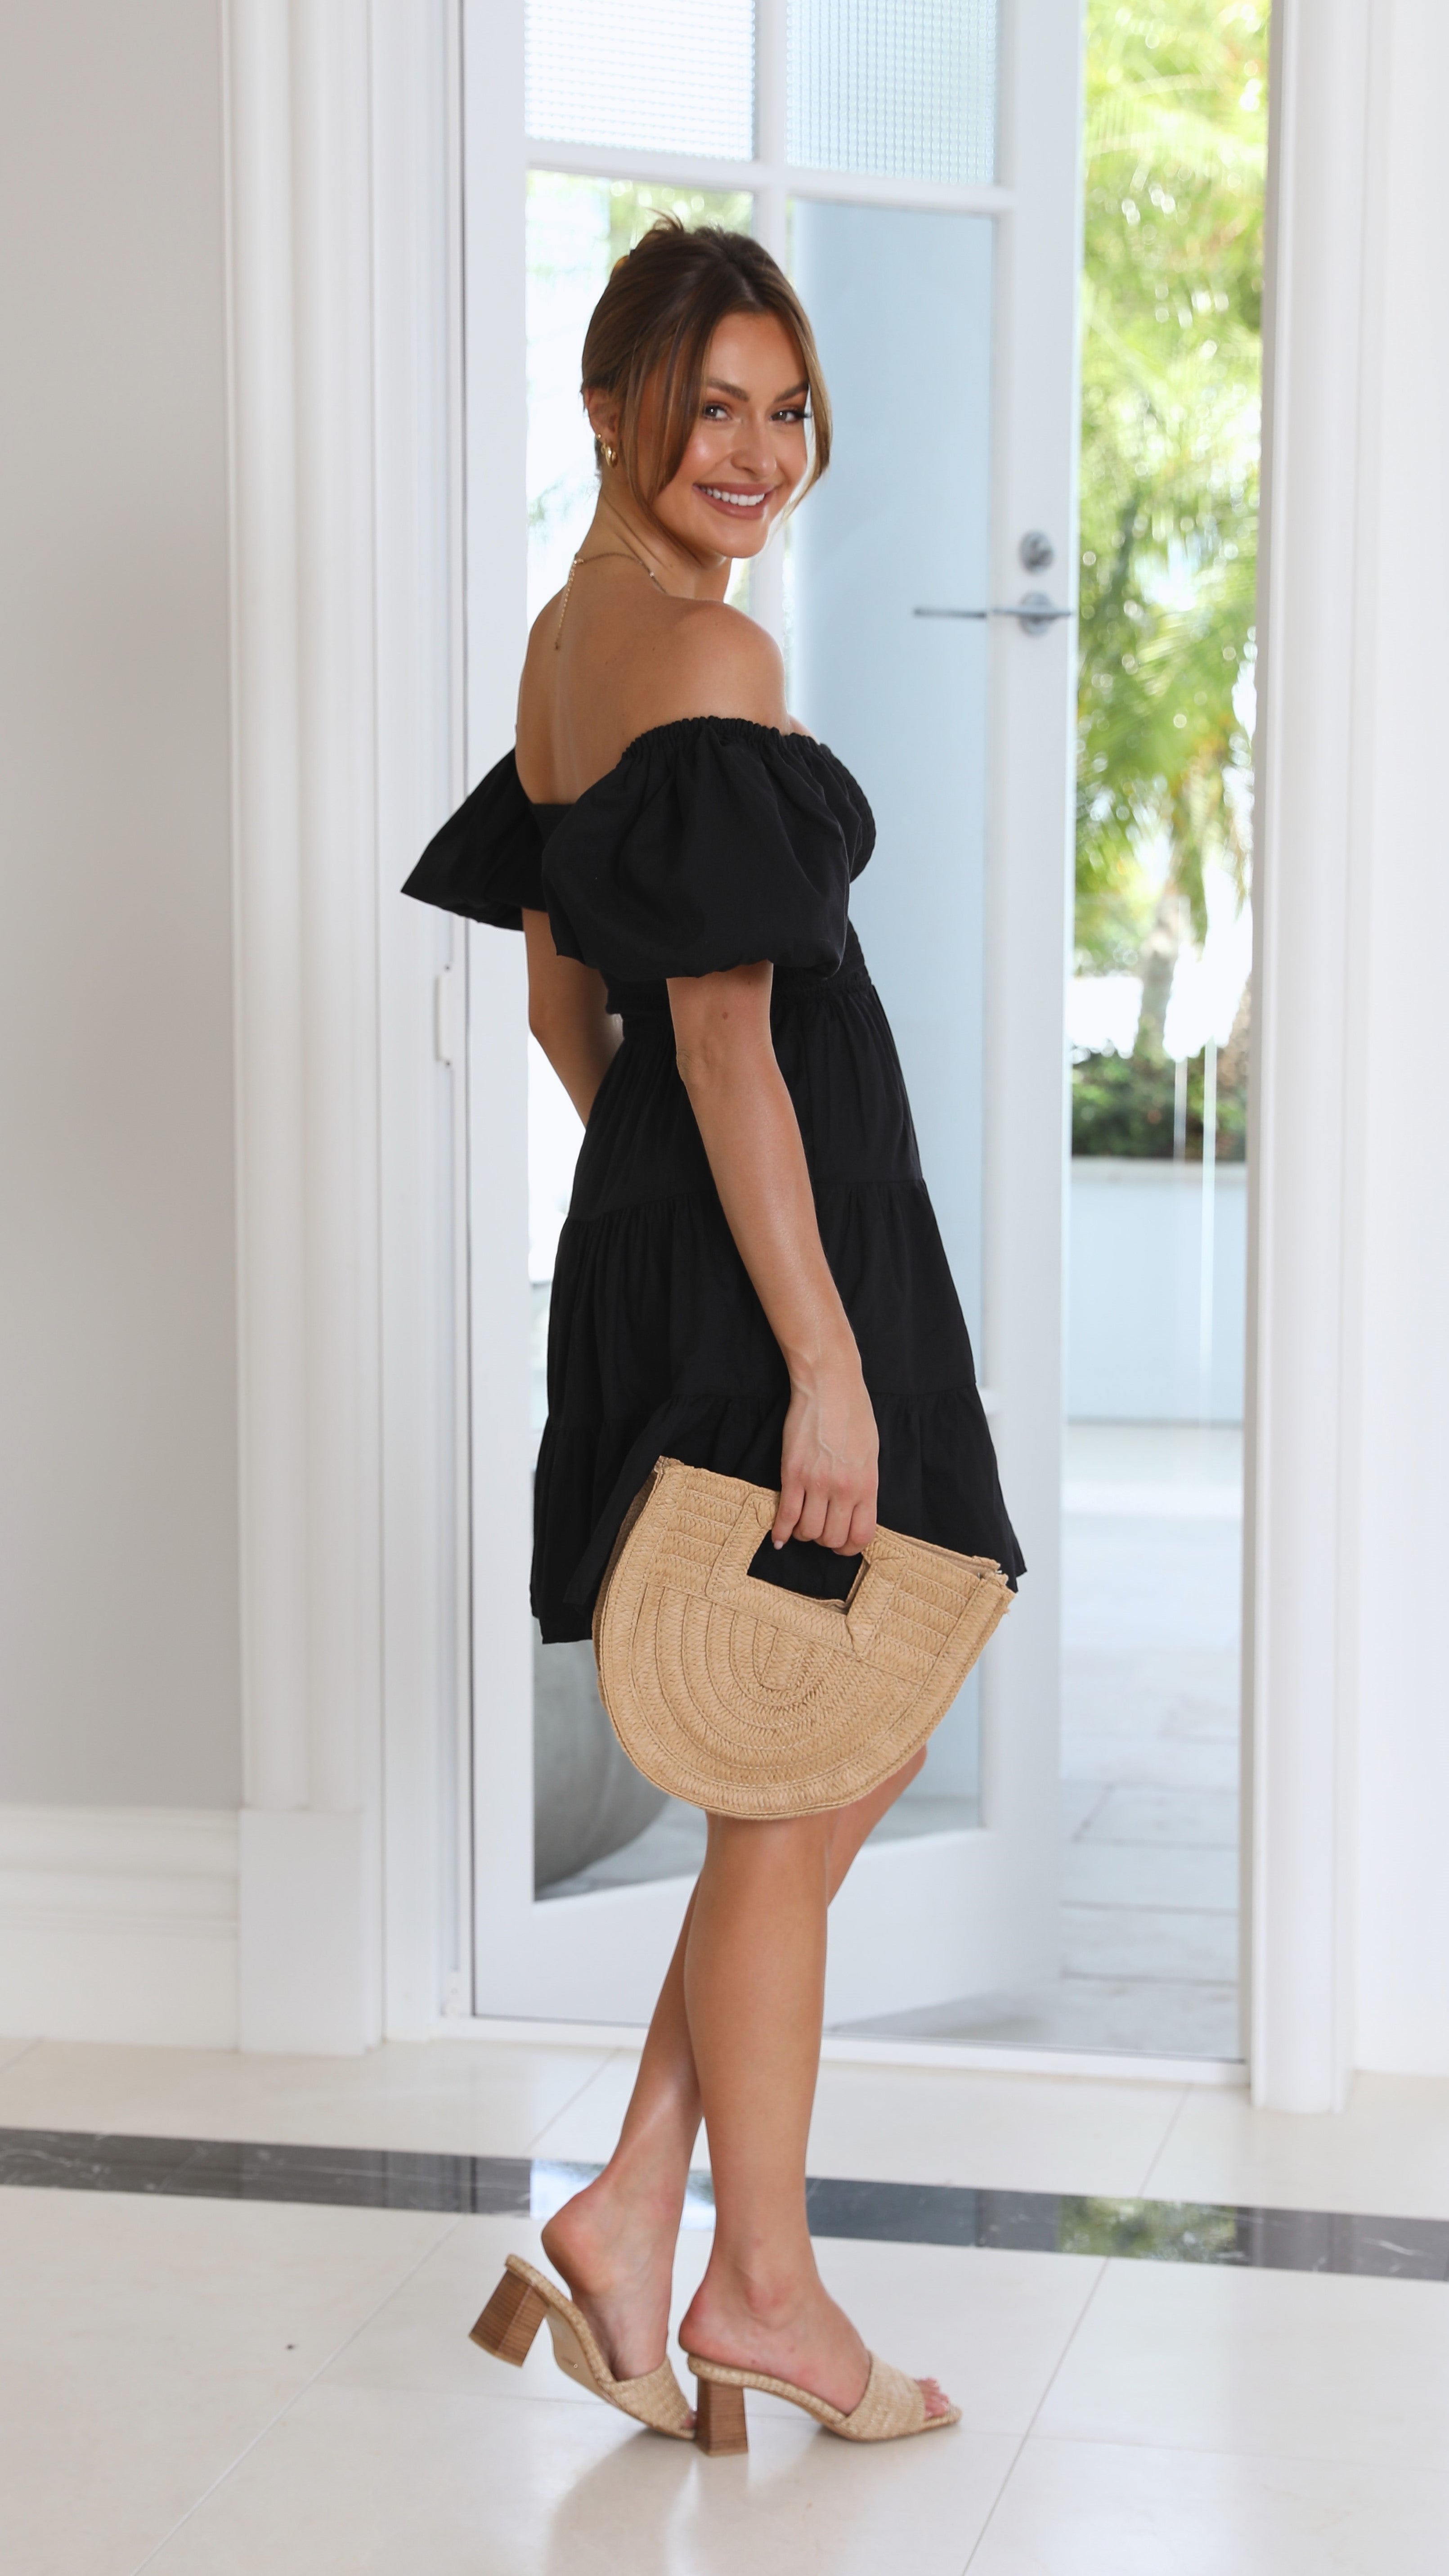 Chanel Mini Dress - Black